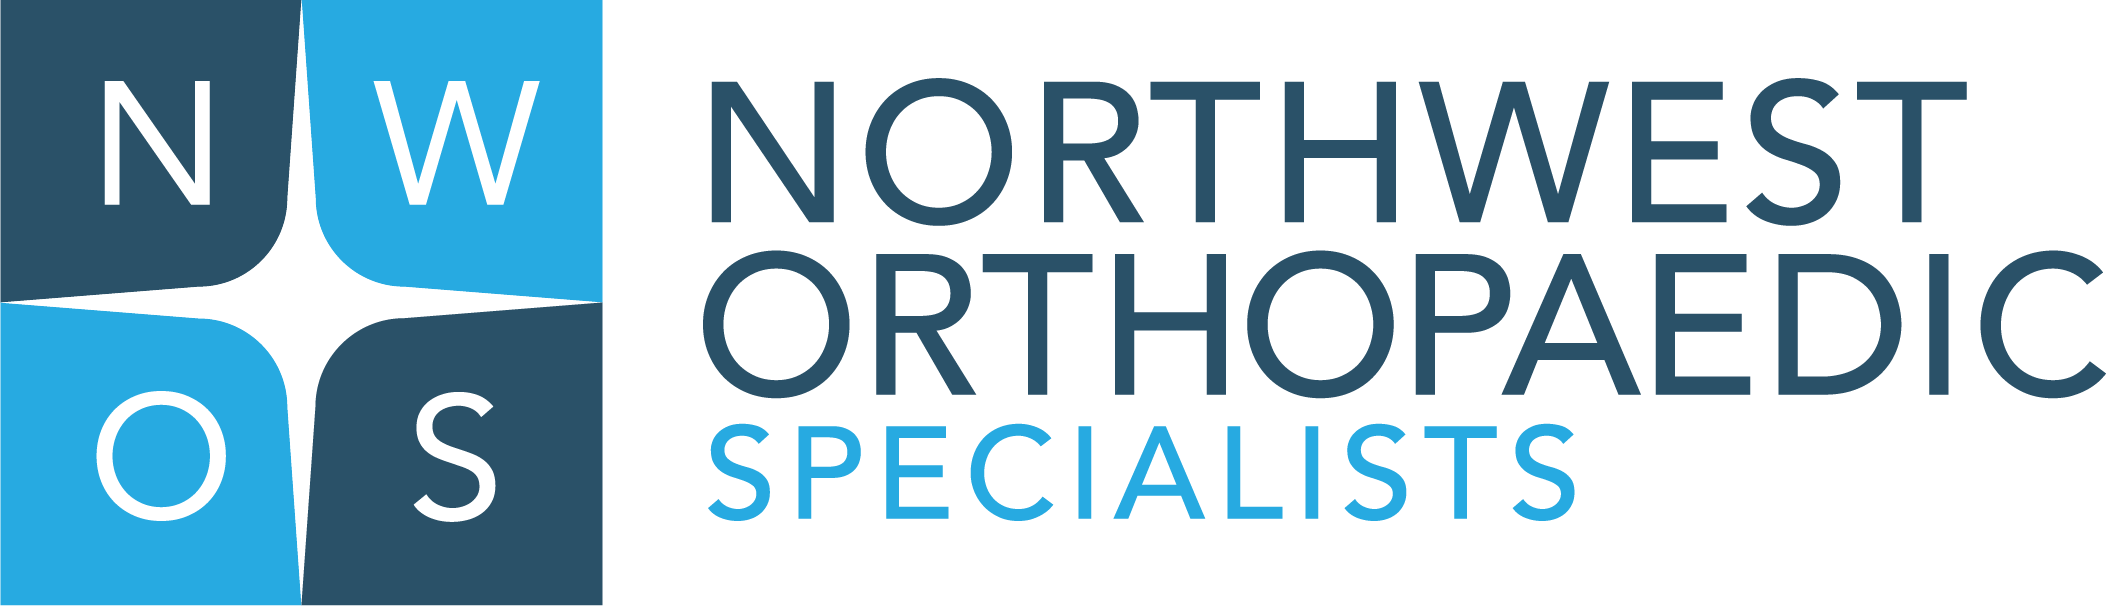 Northwest Orthopaedic Specialists, Spokane, WA 